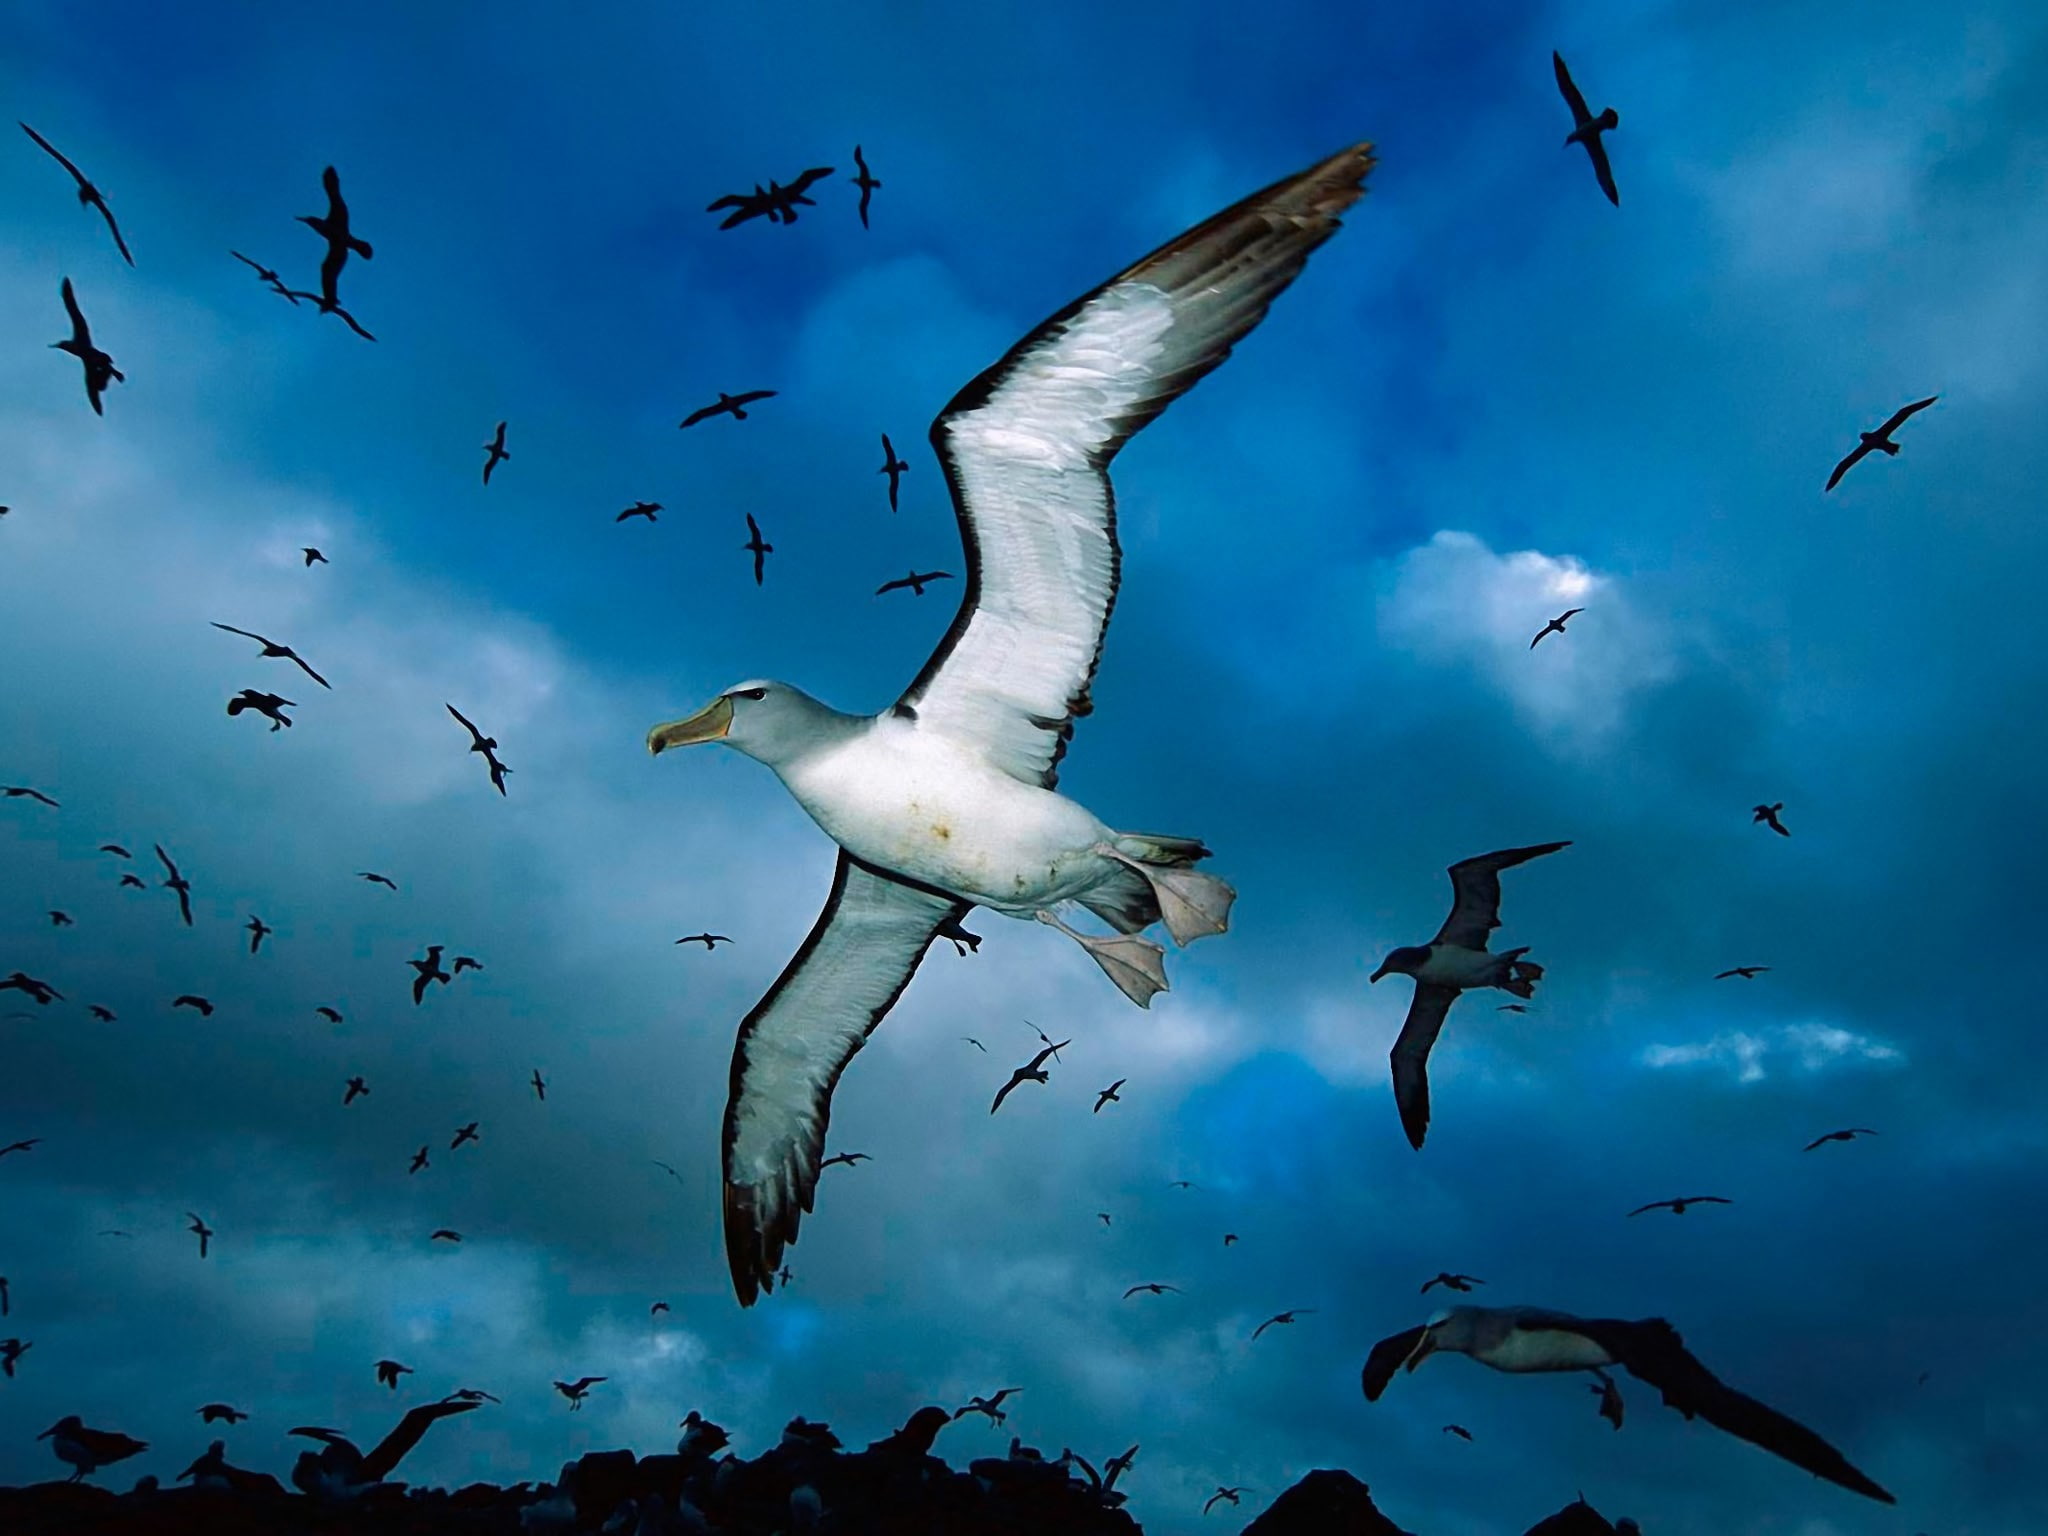 albatross, animal wildlife, animal themes, animals in the wild